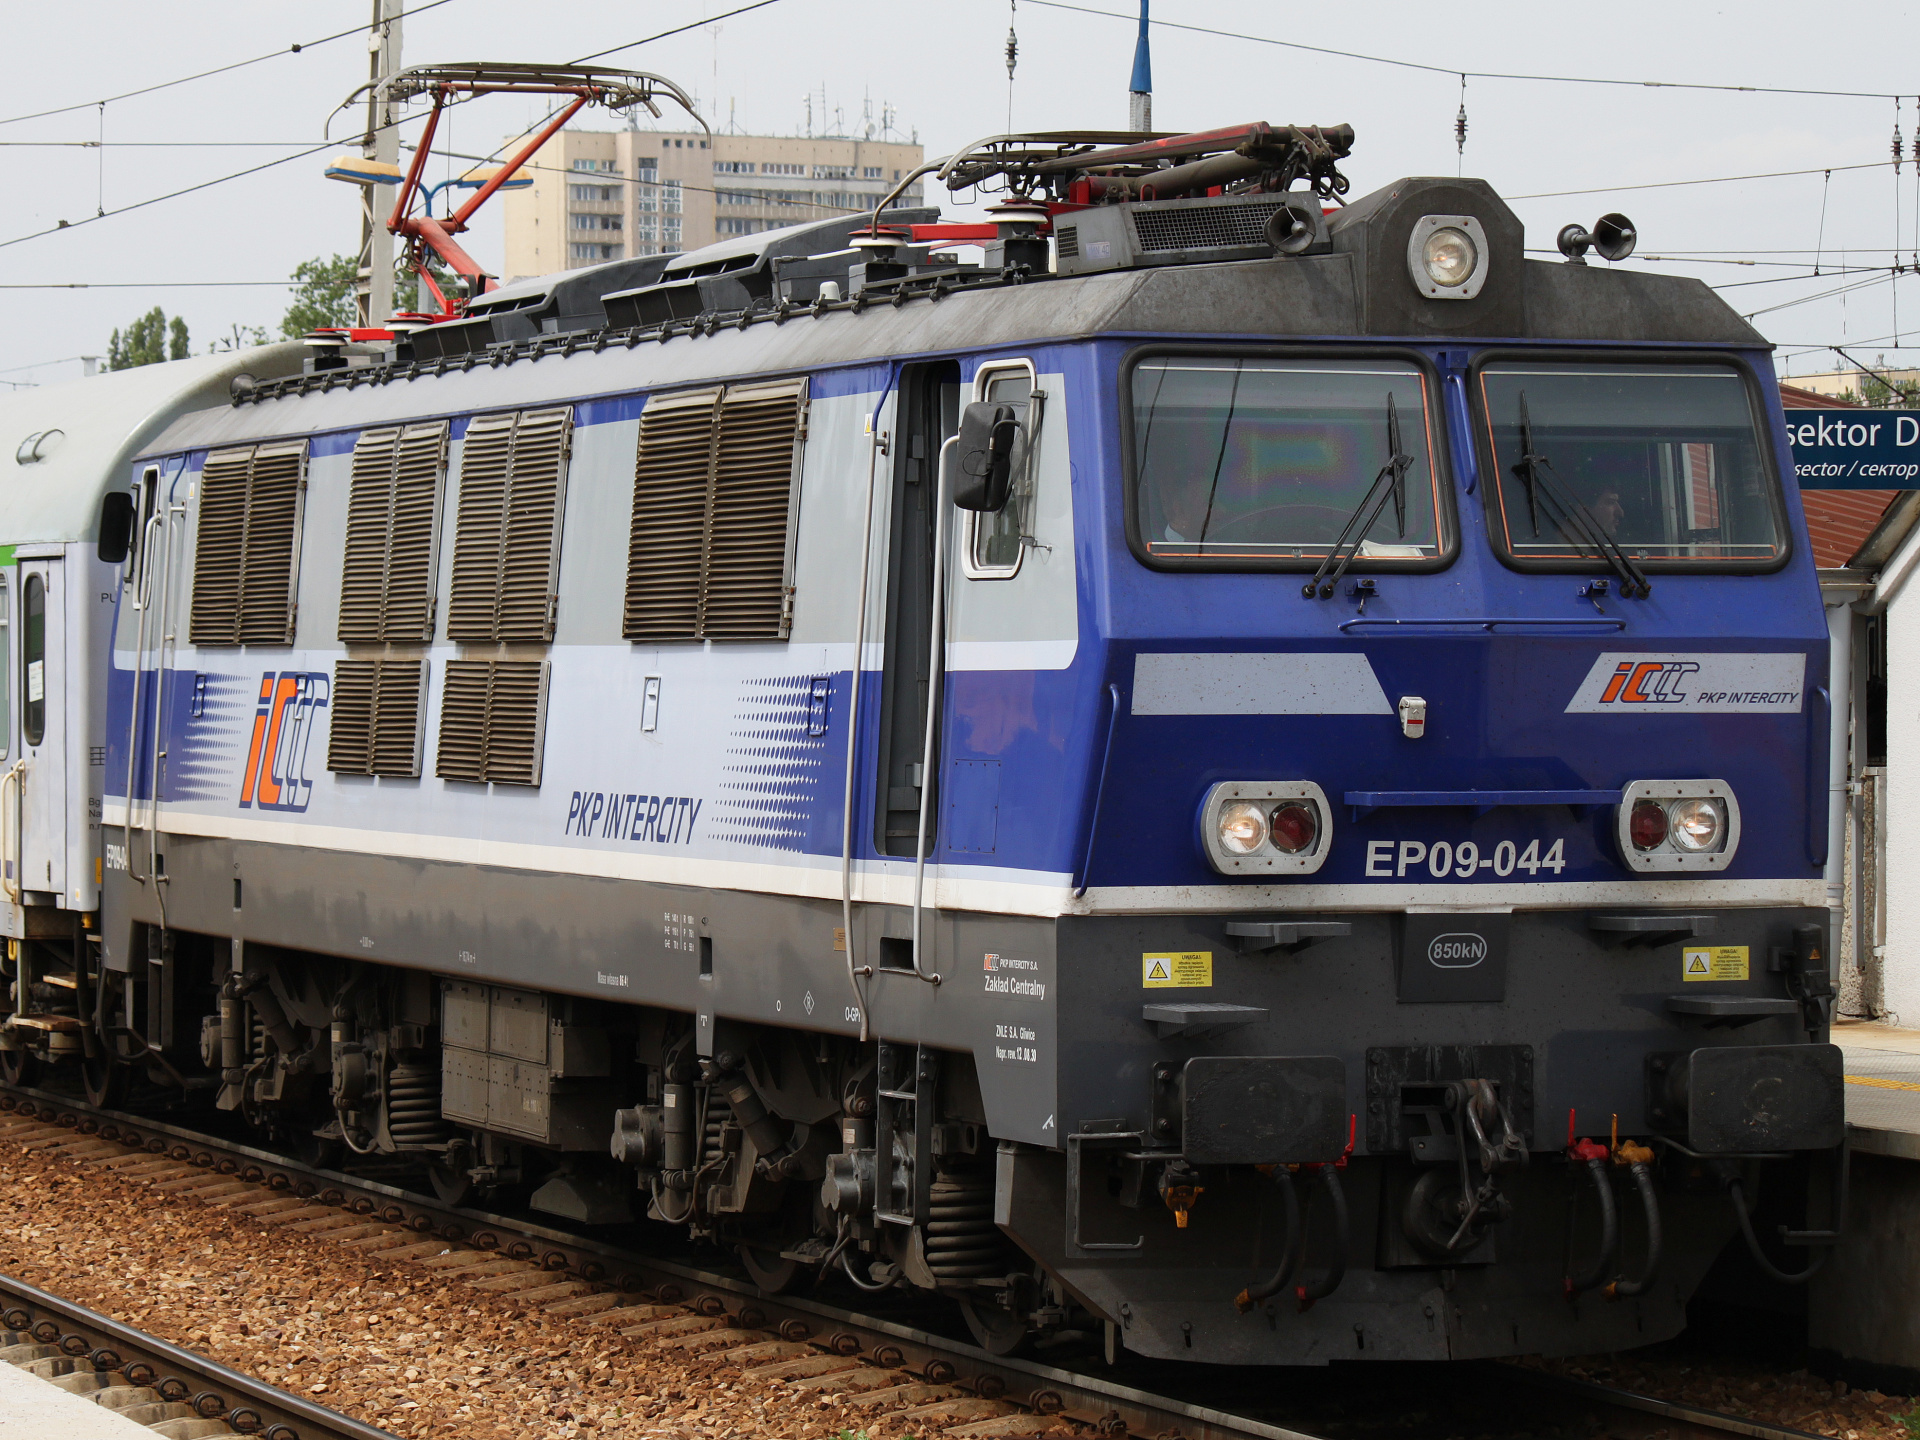 EP09-044 (Vehicles » Trains and Locomotives » Pafawag 104E)